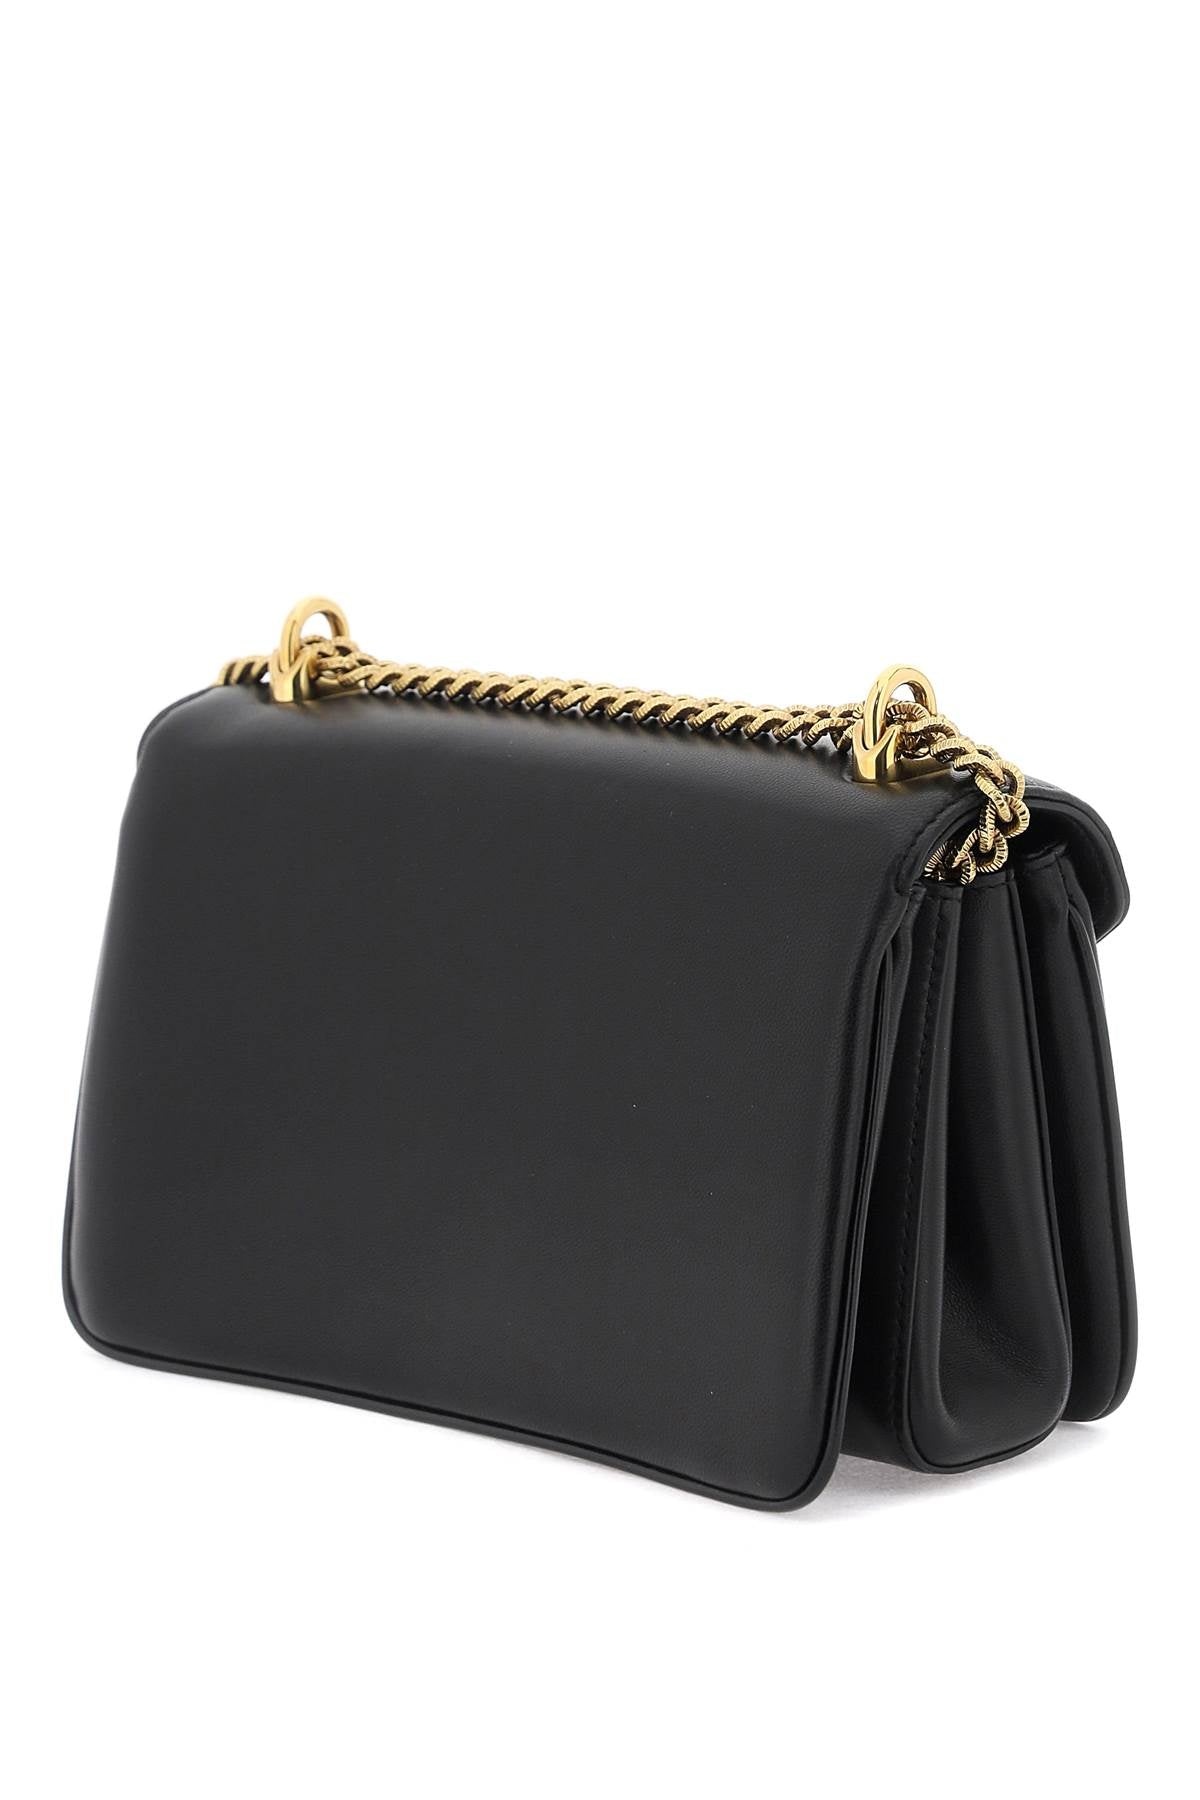 Dolce & Gabbana Devotion Shoulder Bag Women - 2